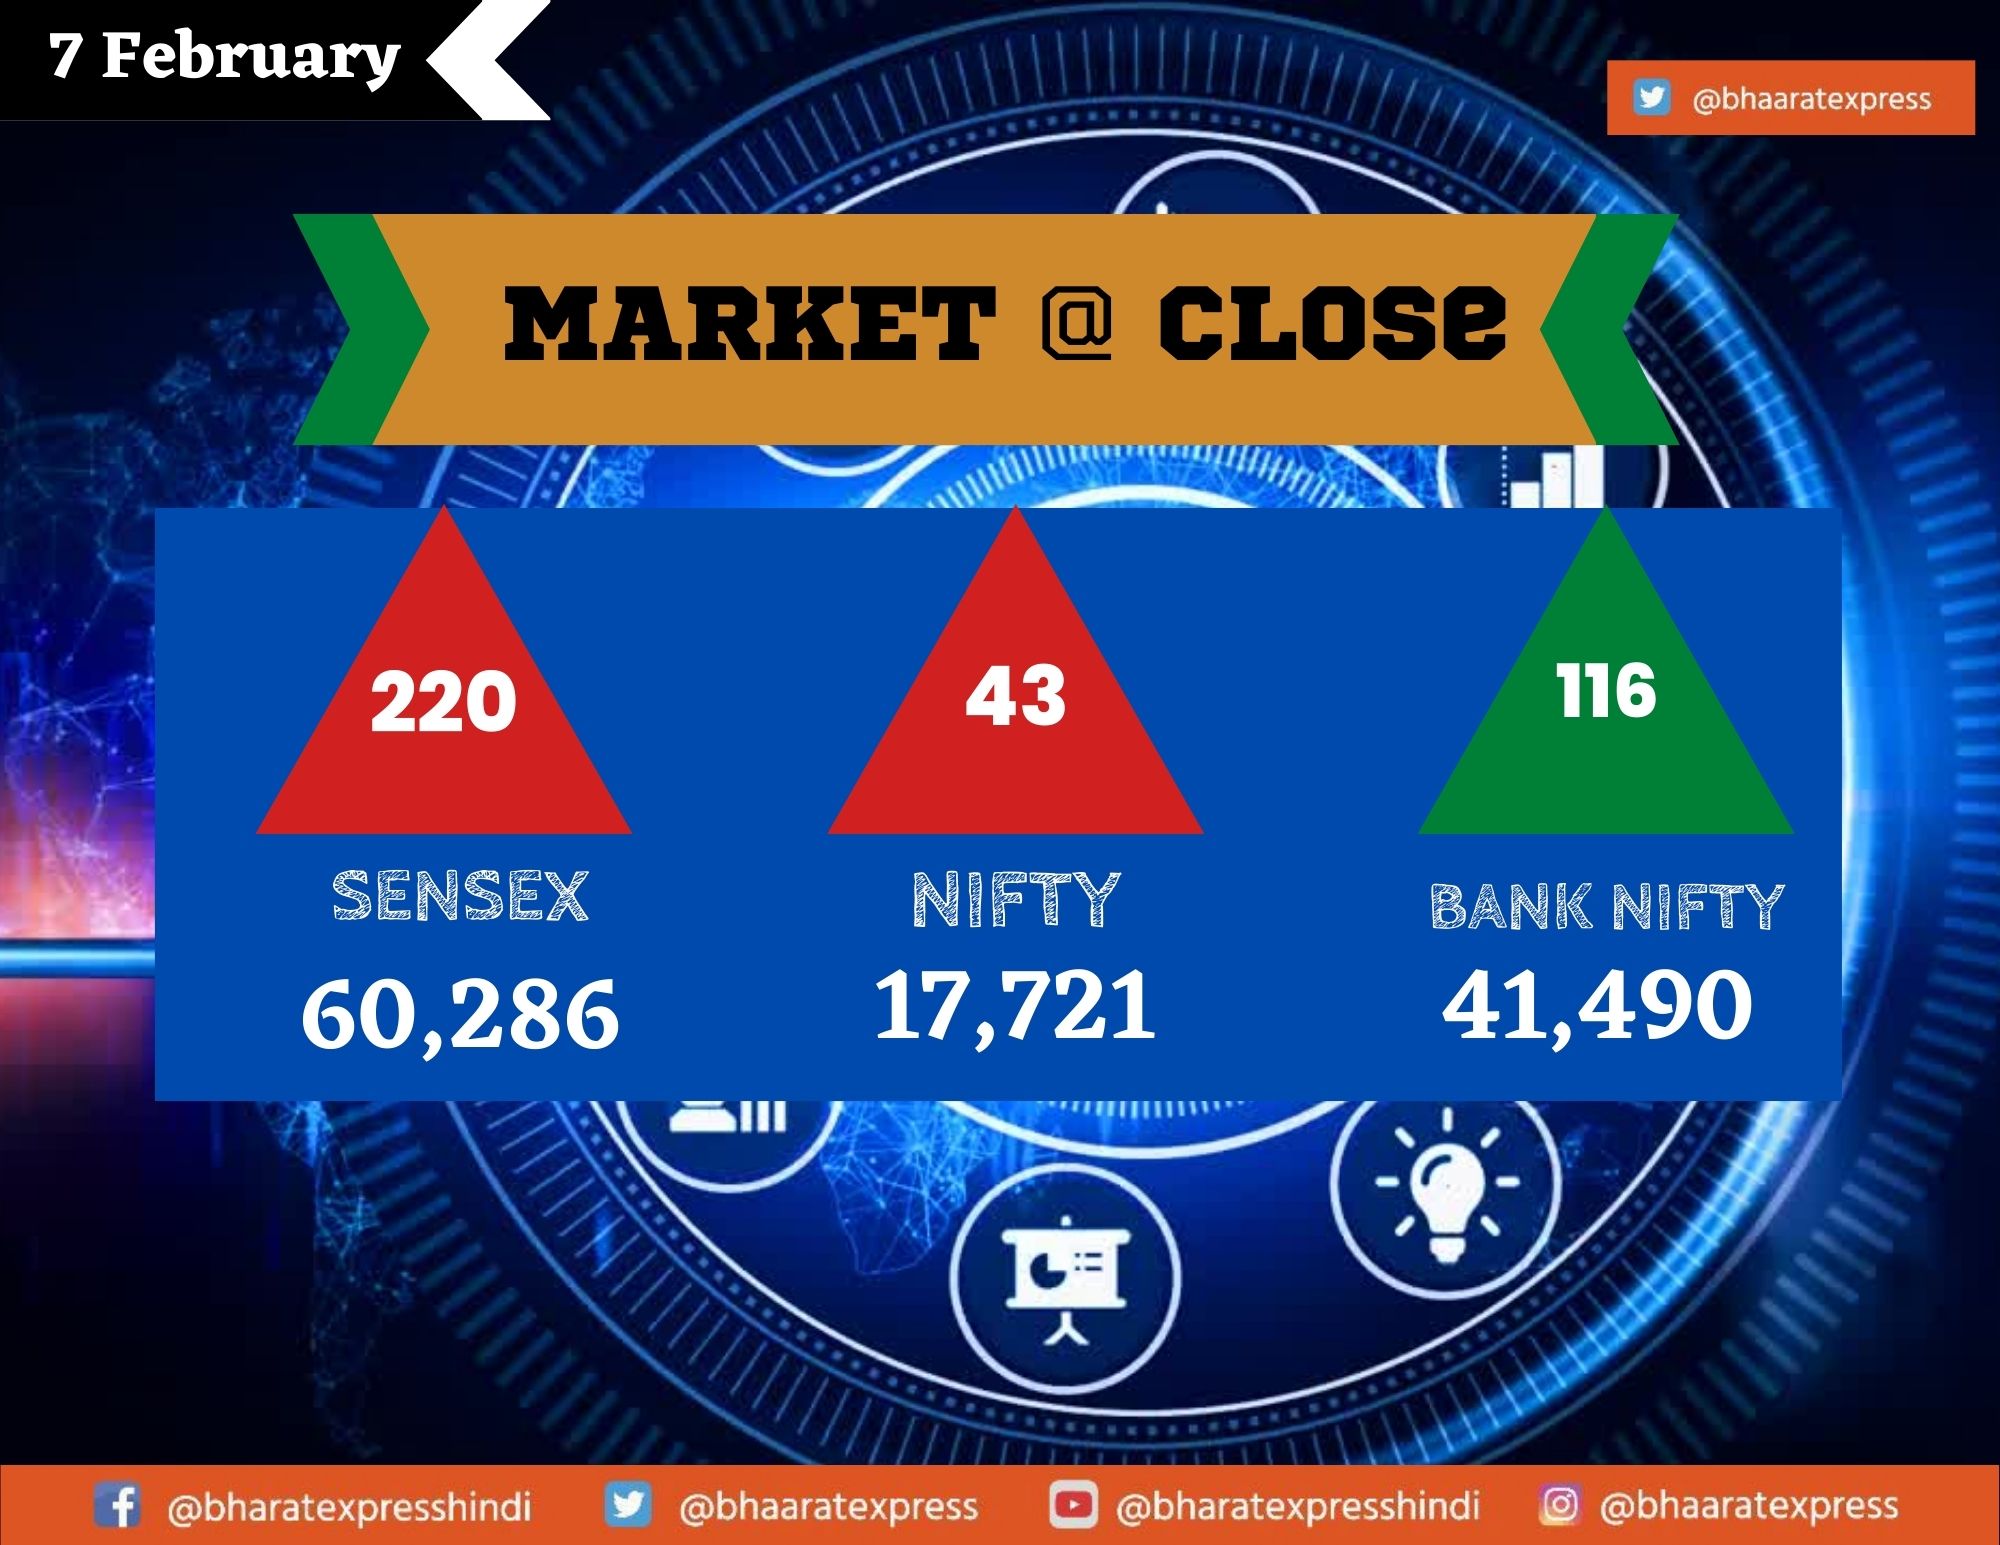 Market closed